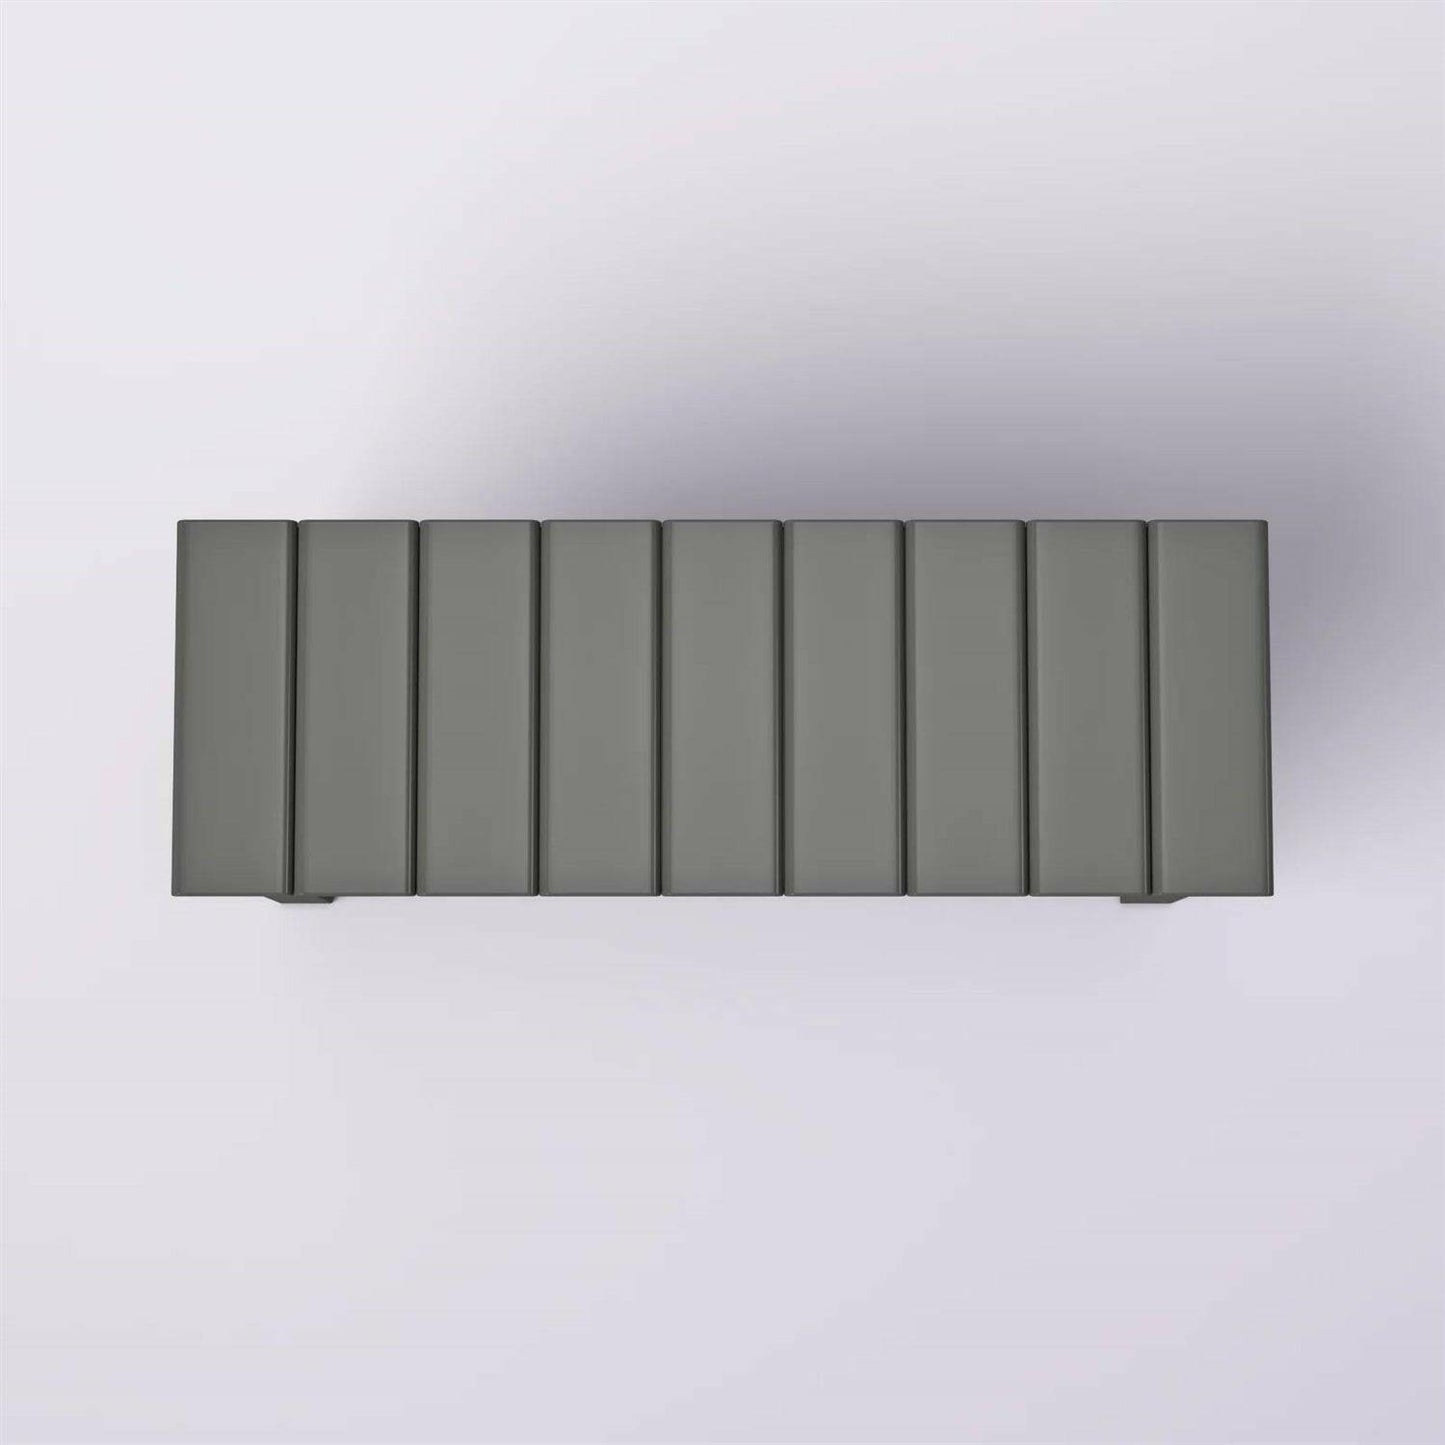 Grey Wood 2-Shelf Shoe Rack Storage Bench For Entryway or Closet - FurniFindUSA